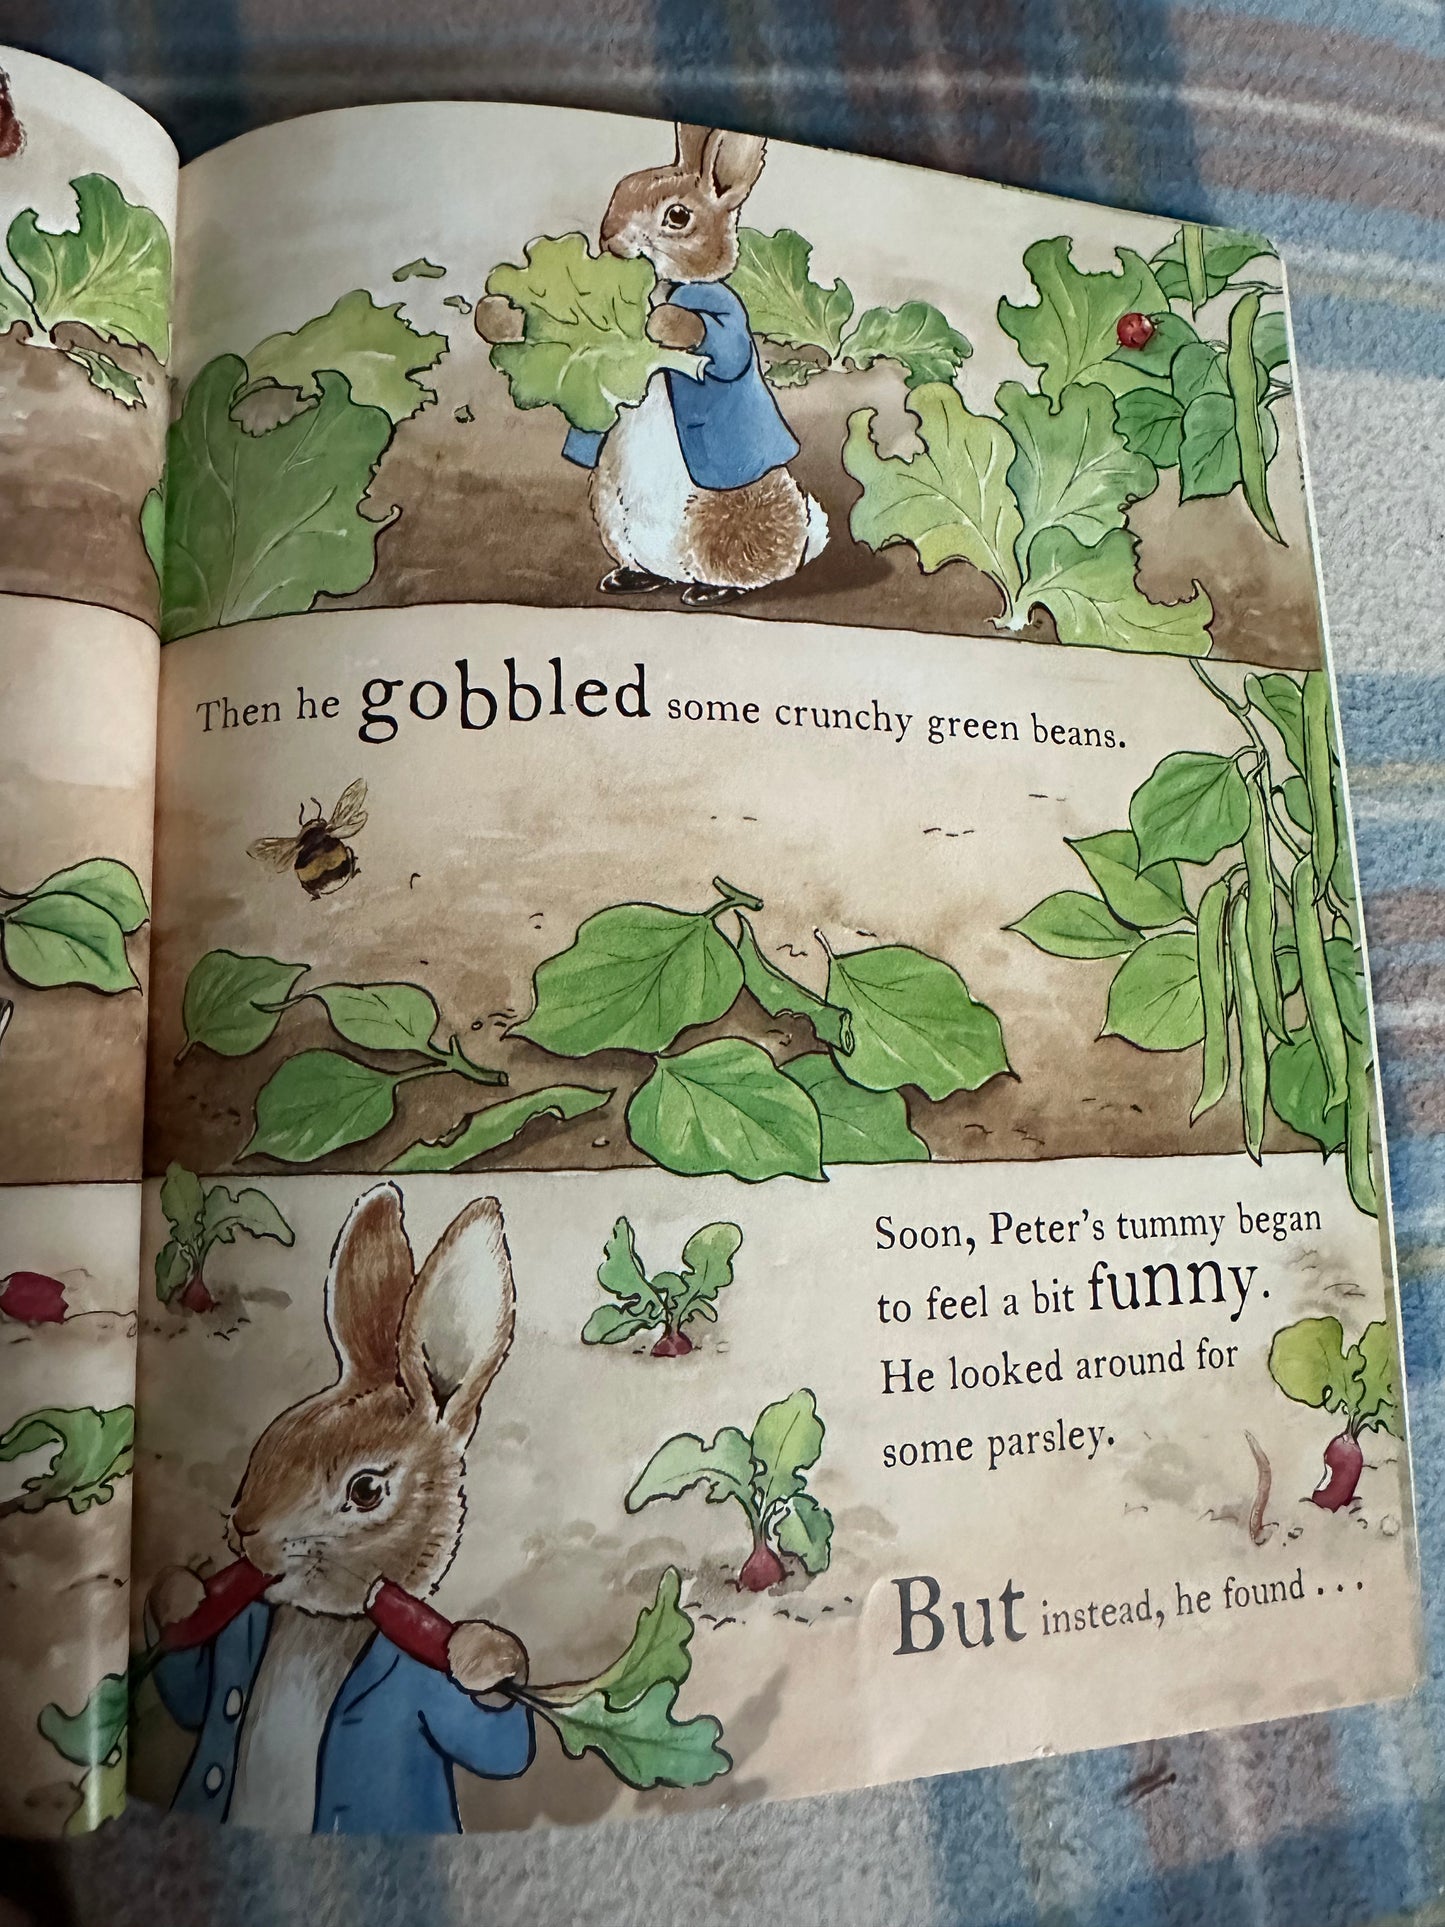 2011 The Tale Of The Naughty Little Rabbit - Beatrix Potter(Booktrust Frederick Warne & Co Ltd)